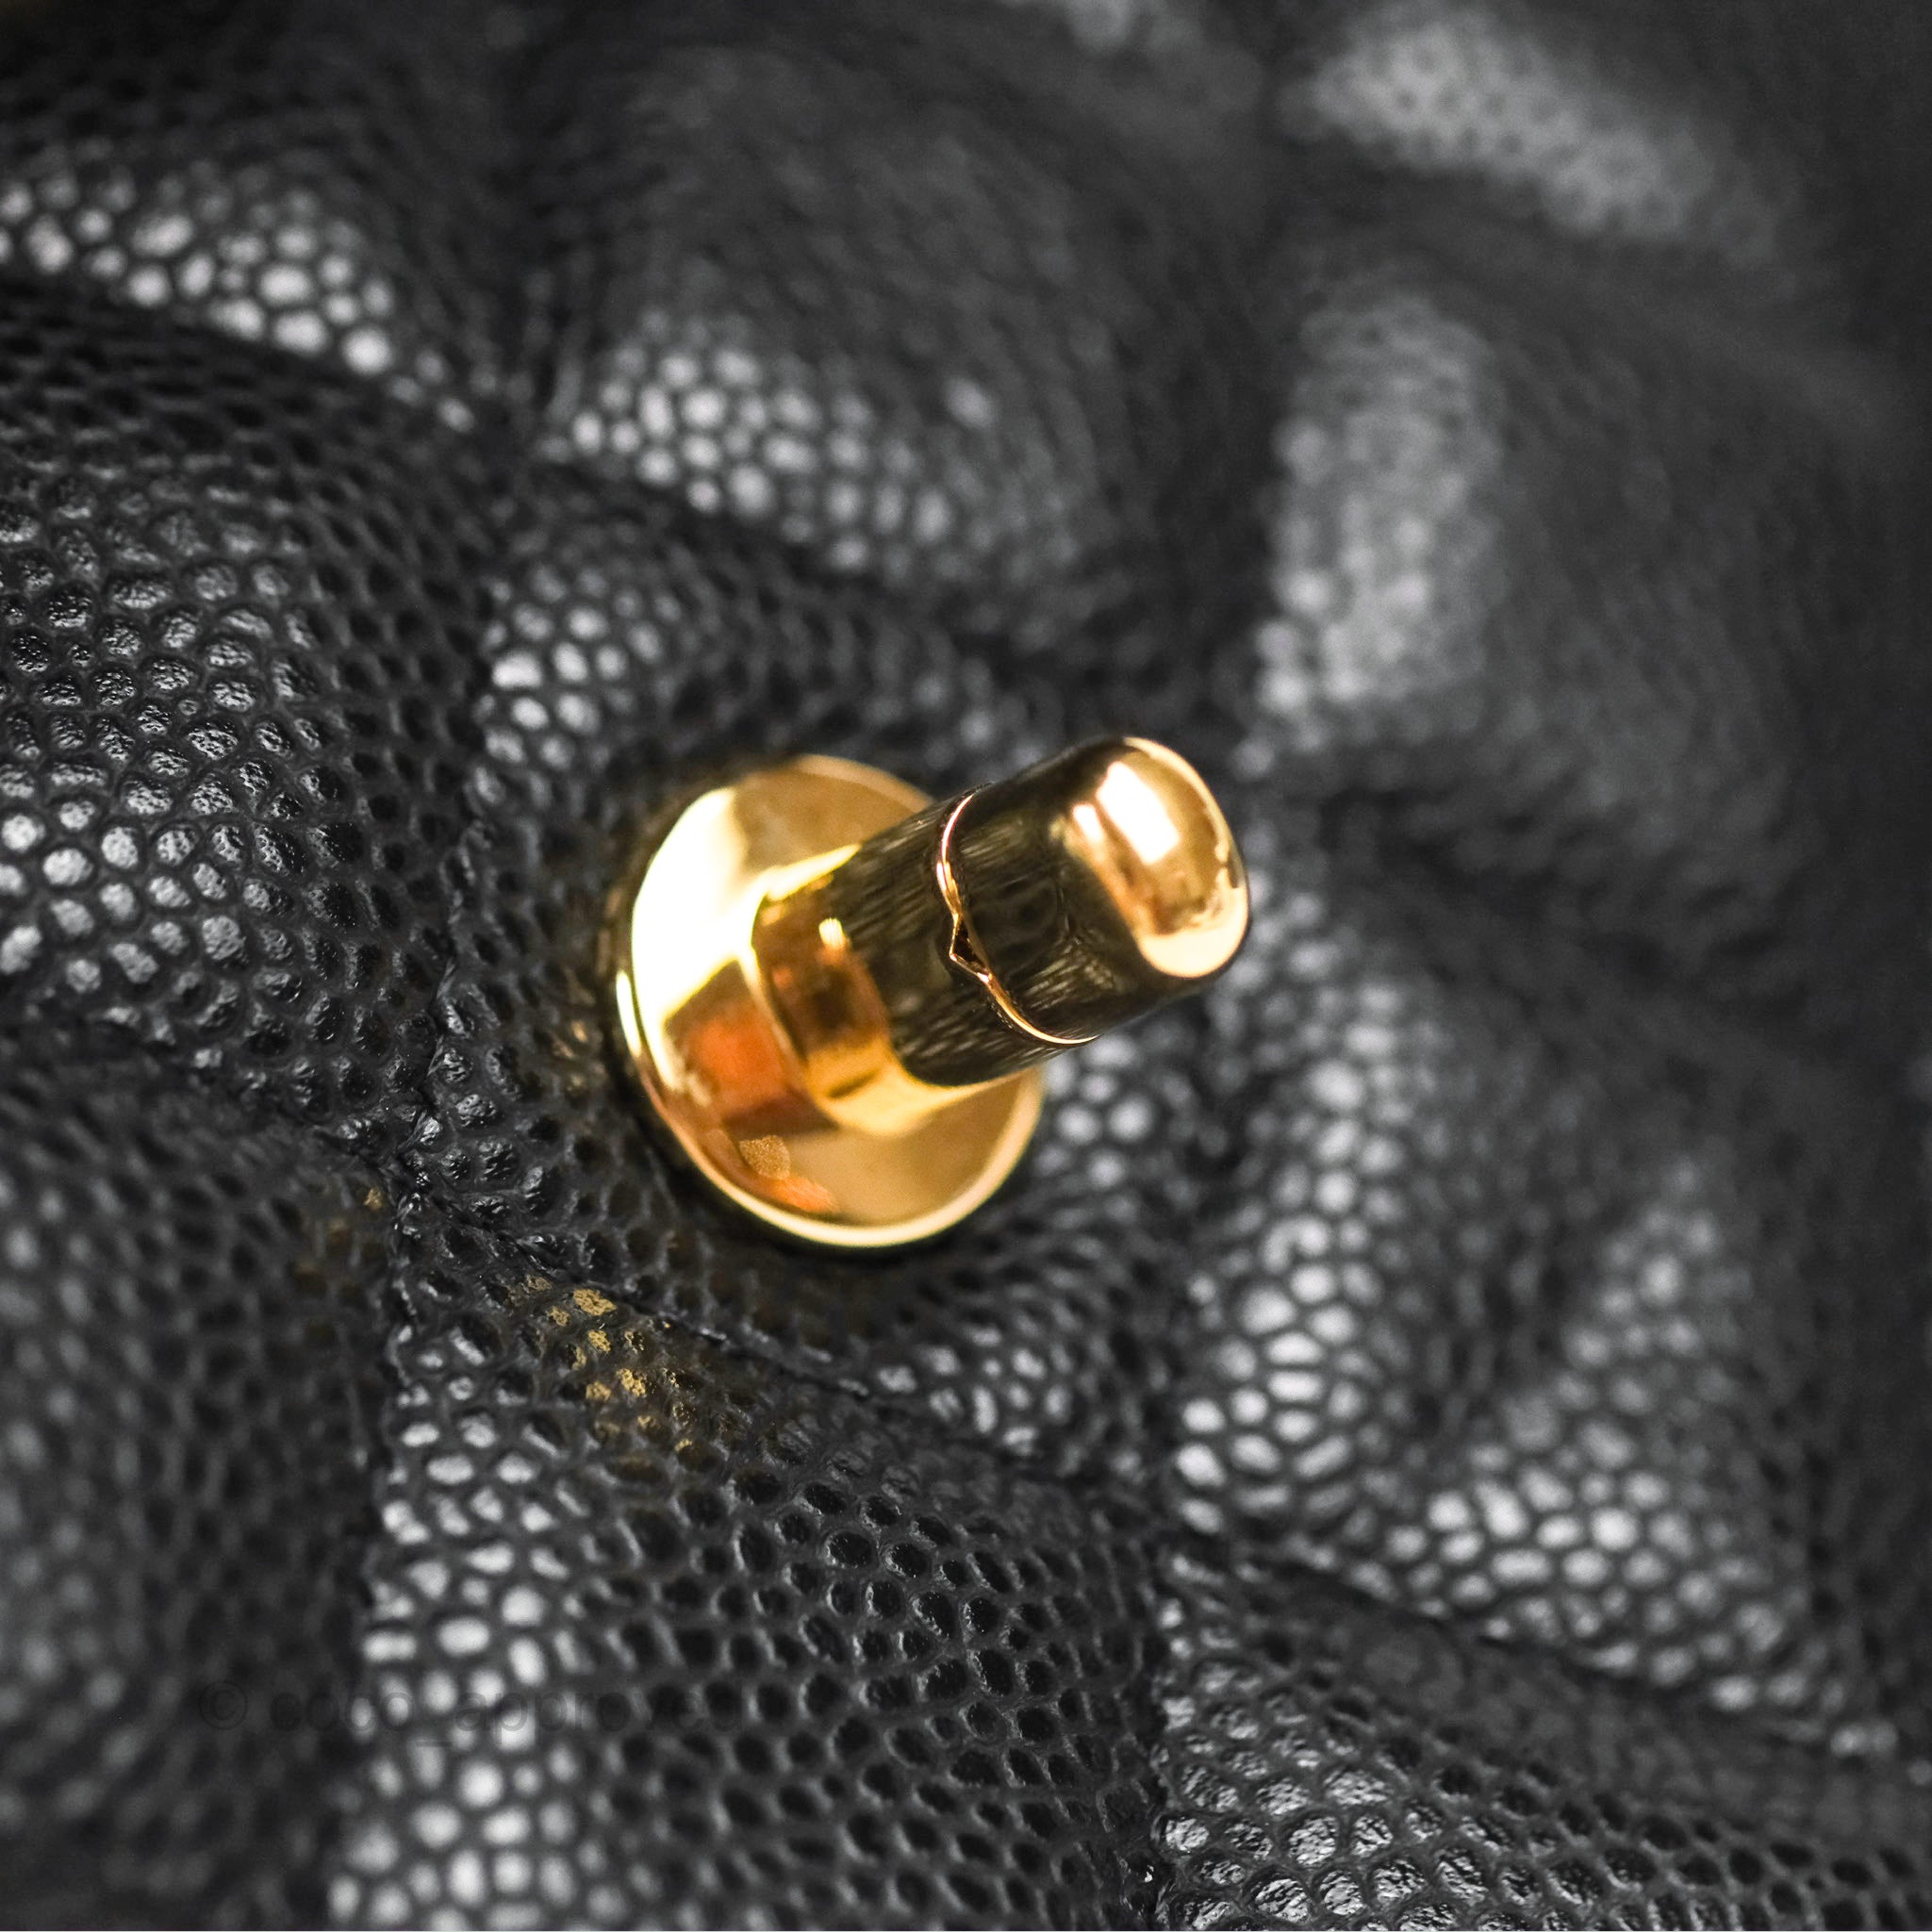 Chanel Jumbo Double Flap Black Caviar Gold Hardware⁣⁣ – Coco